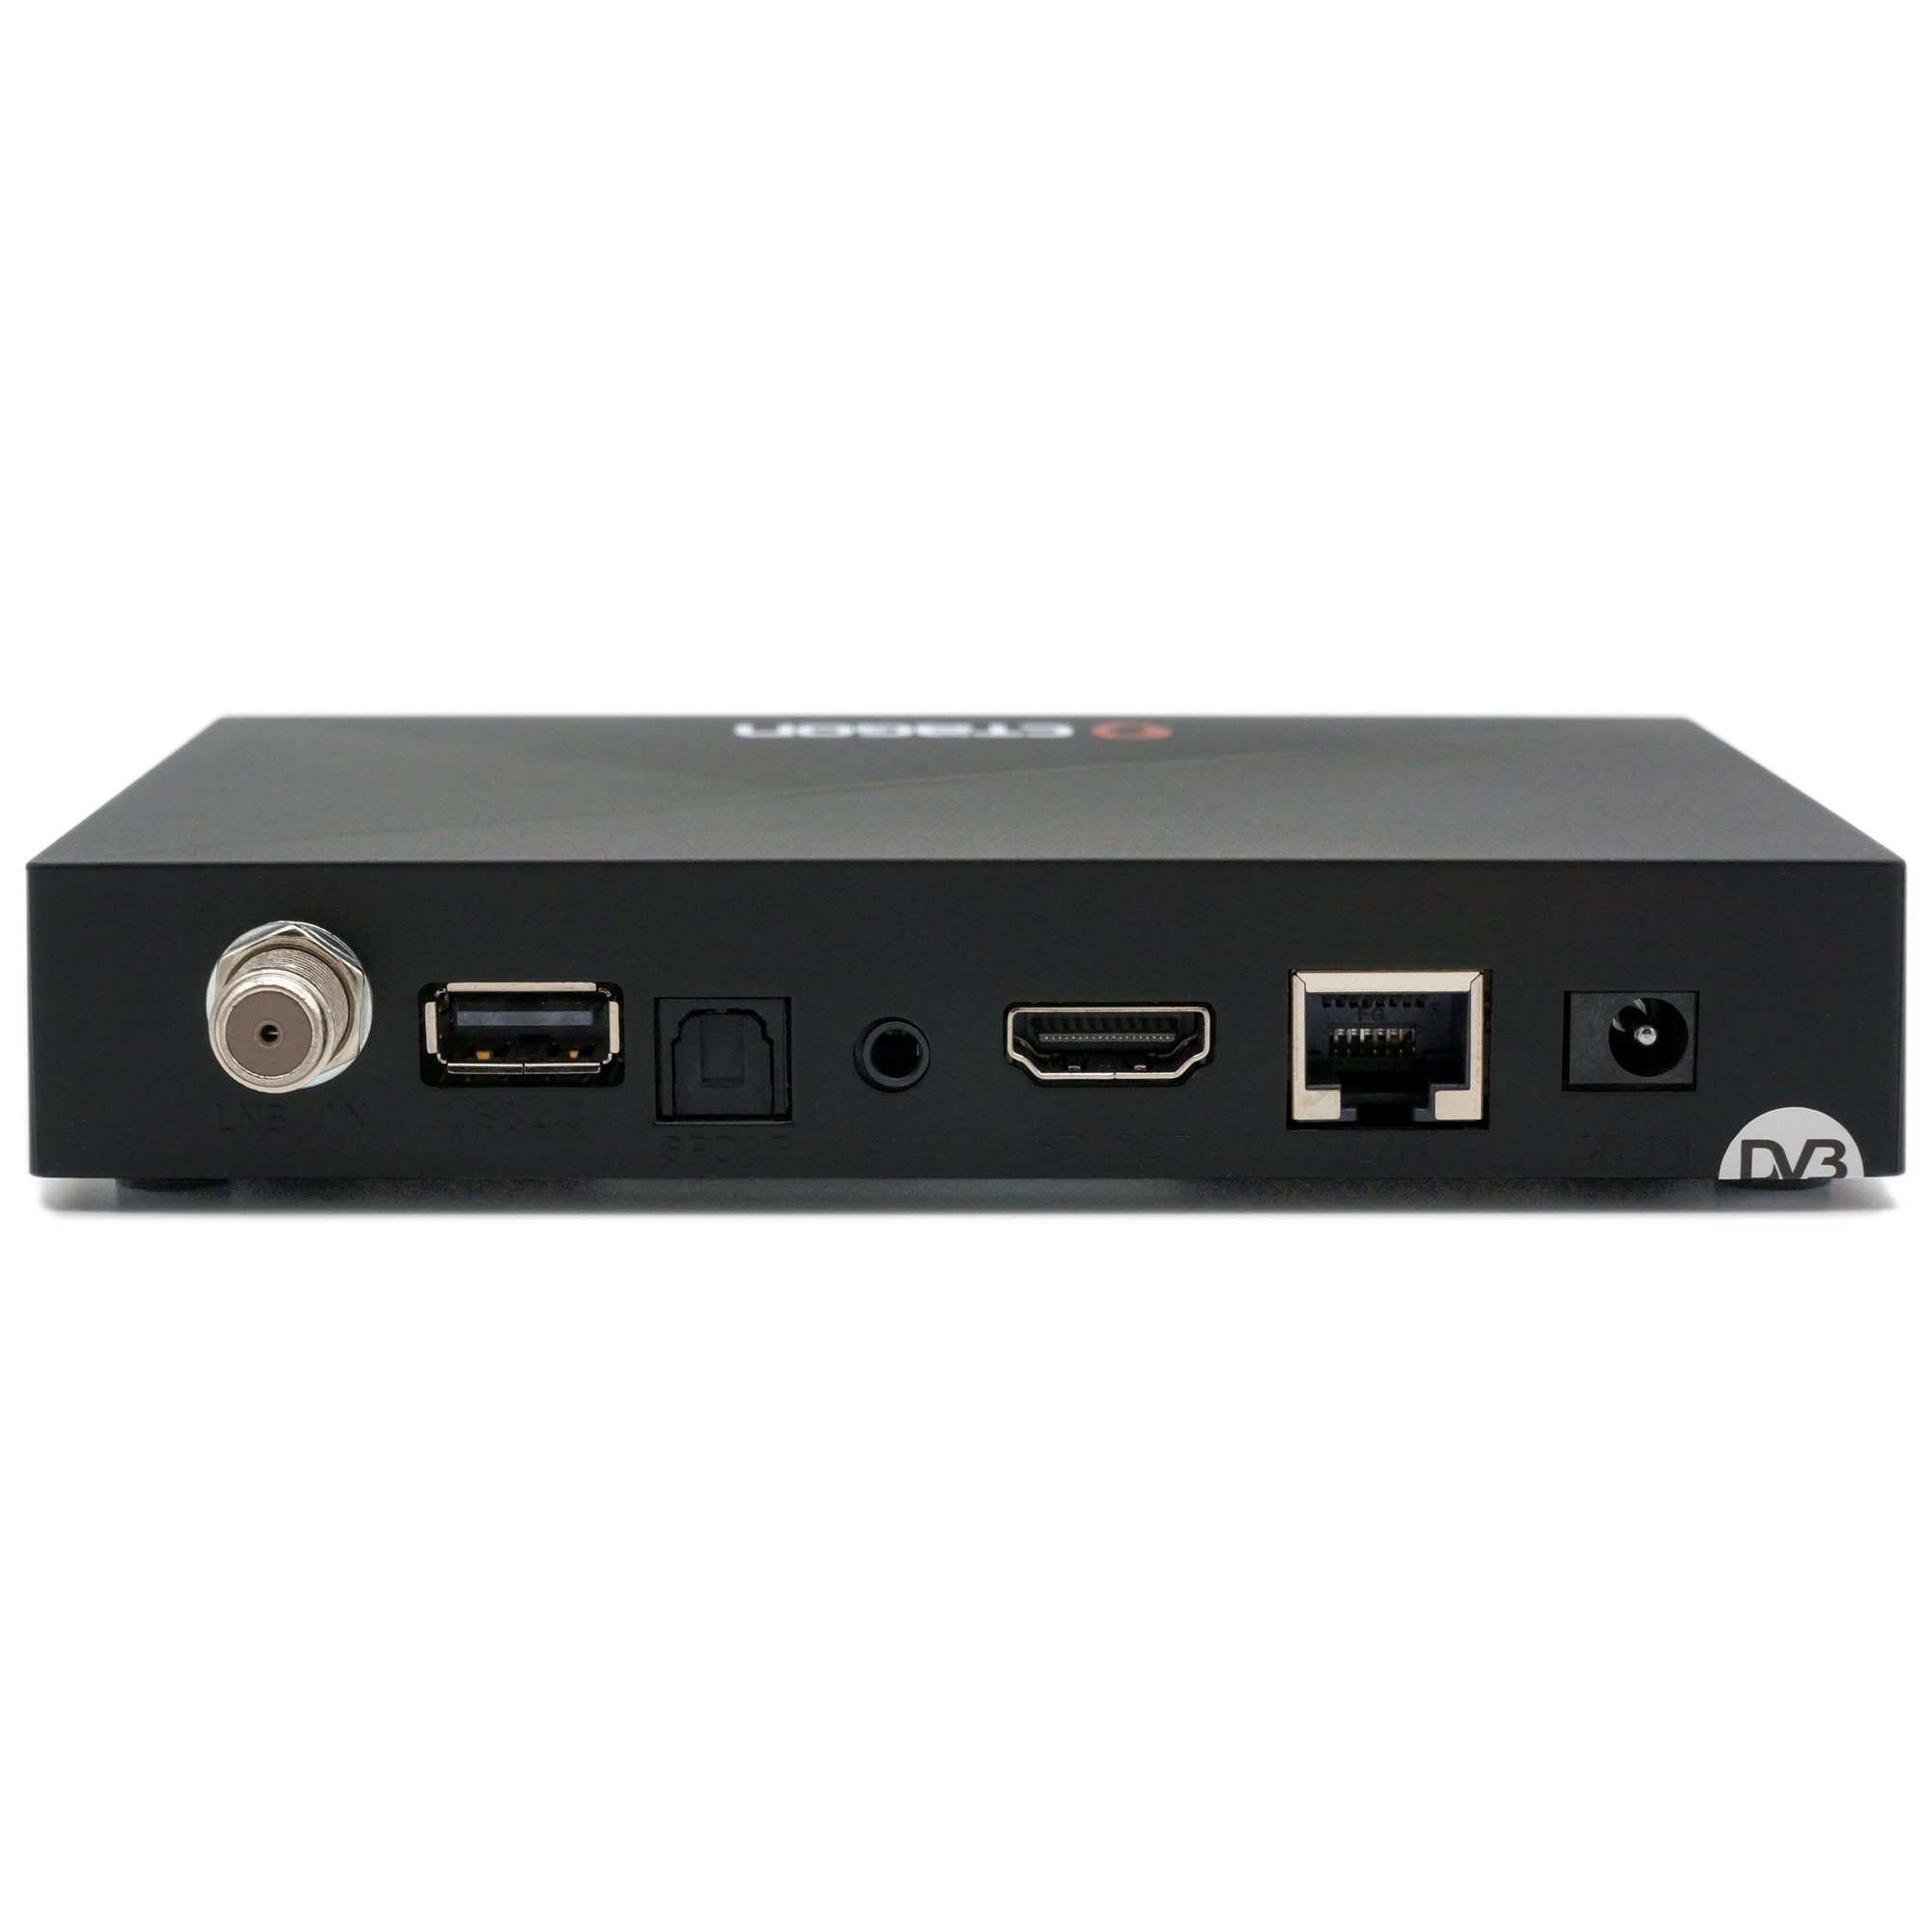 OCTAGON SFX6018 S2+IP - H.265 Smart HD DVB-S2 E2 Linux 1x Receiver, HEVC Sat SAT-Receiver